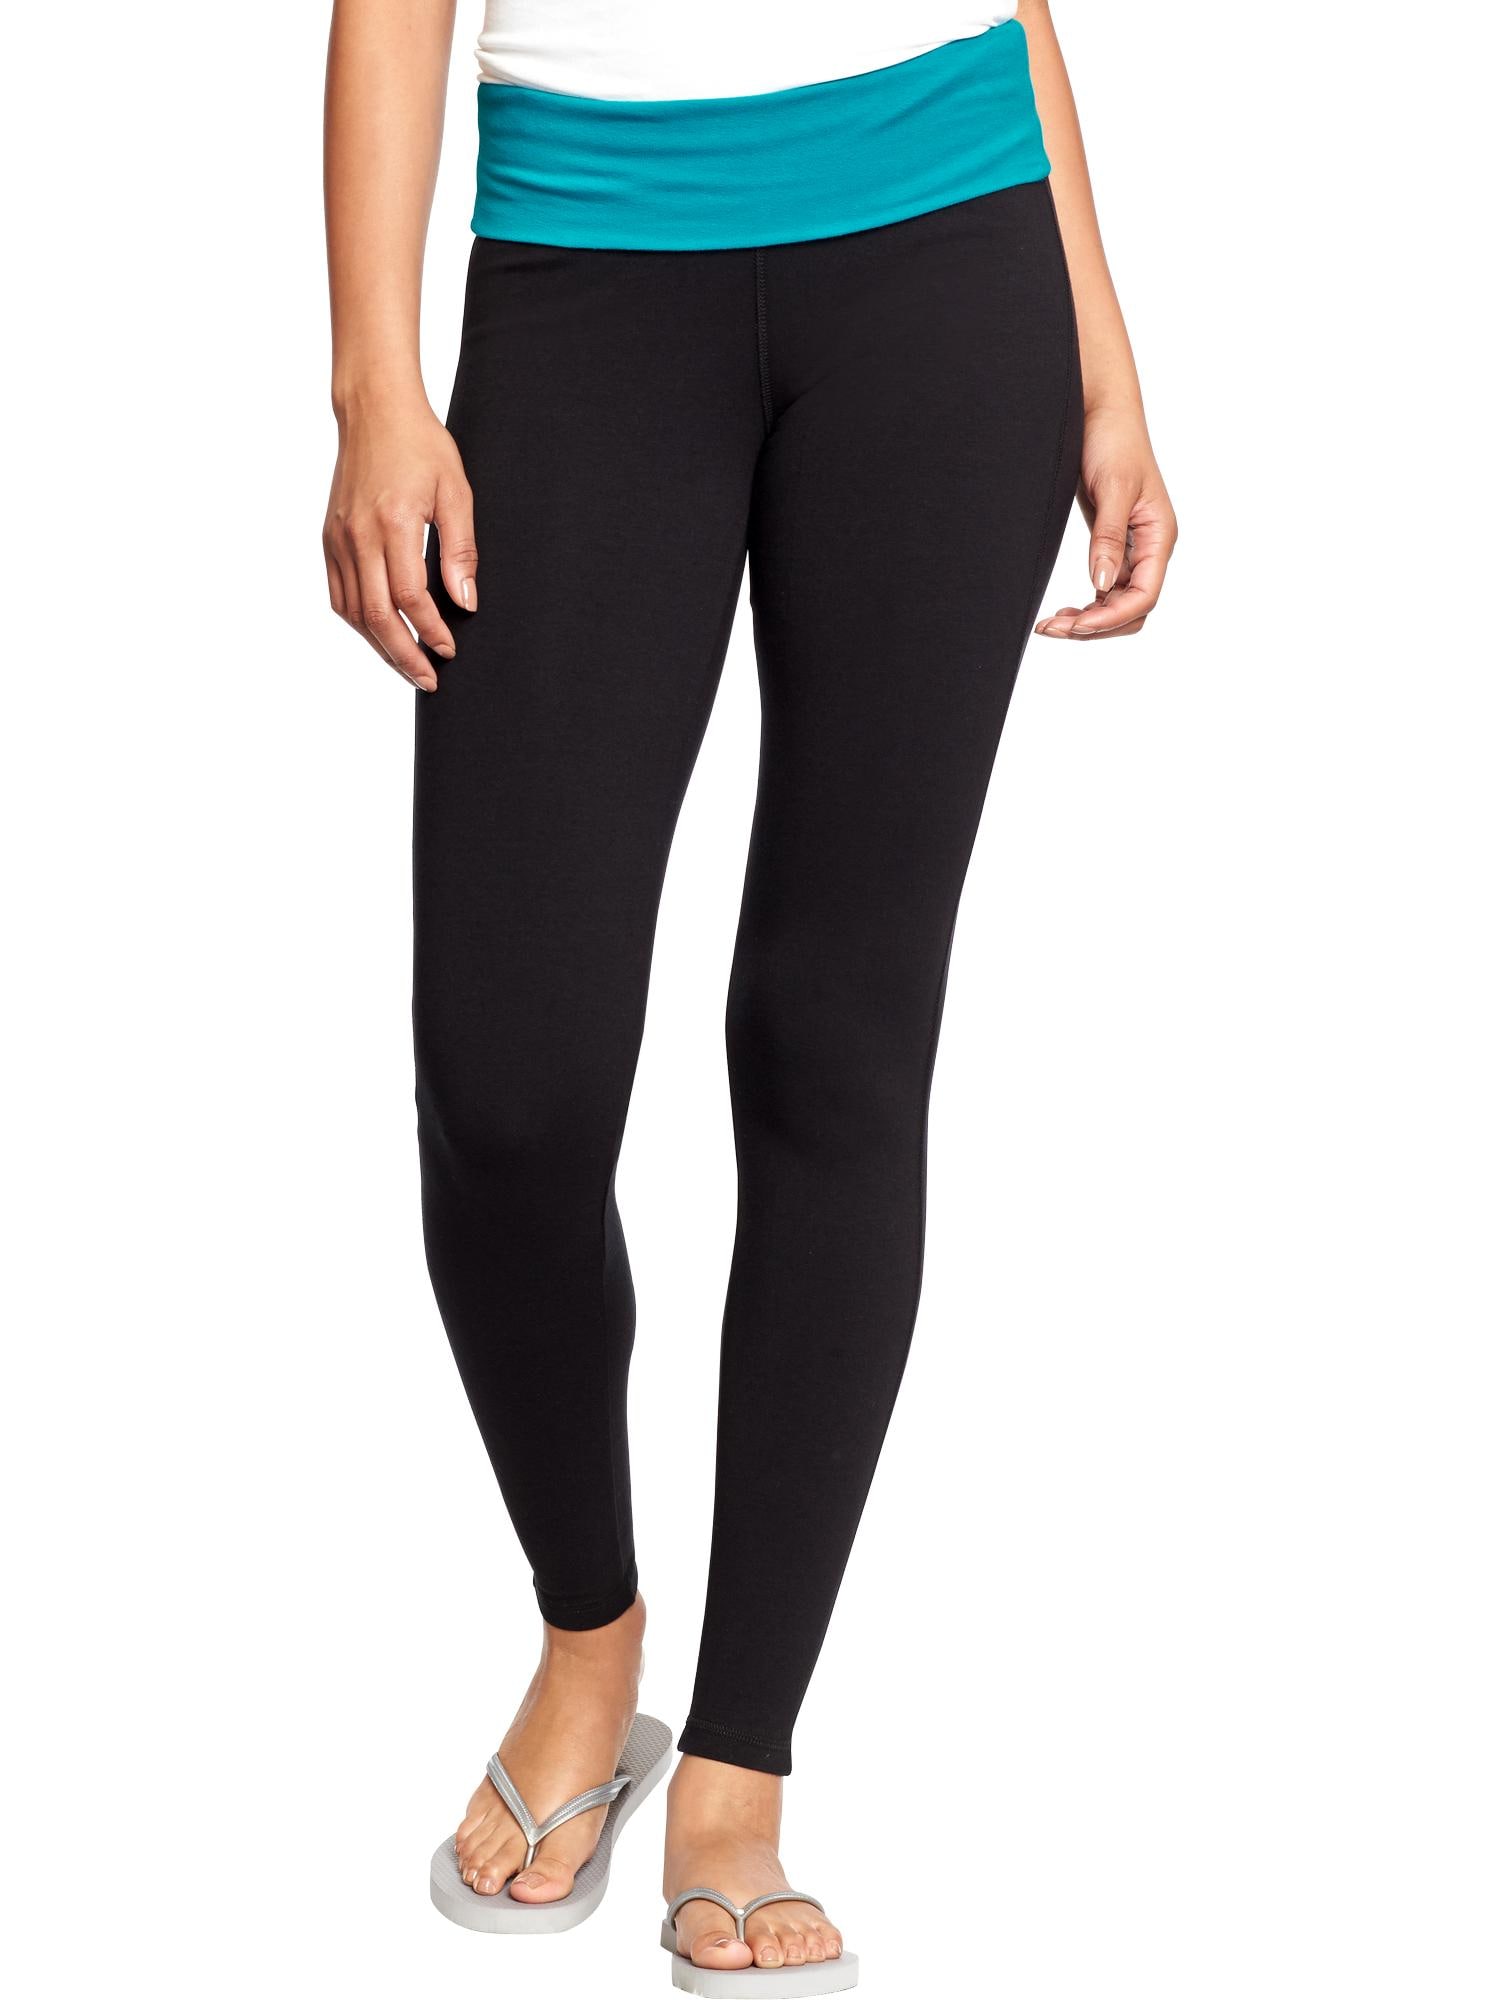 Adjustable-Rise Go-Dry Yoga Pants for Women